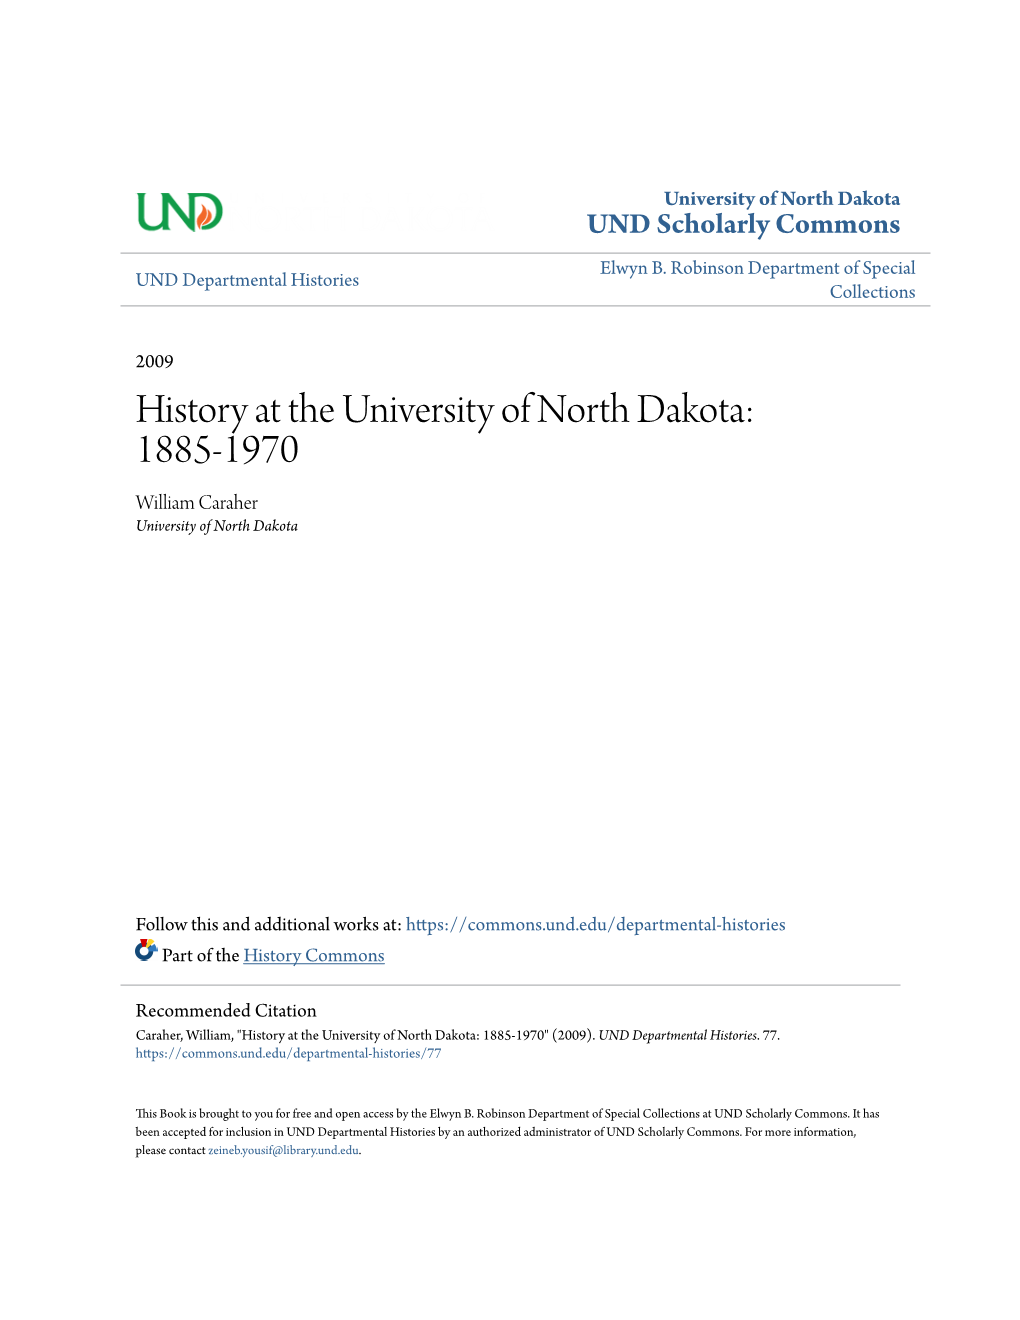 History at the University of North Dakota: 1885-1970 William Caraher University of North Dakota